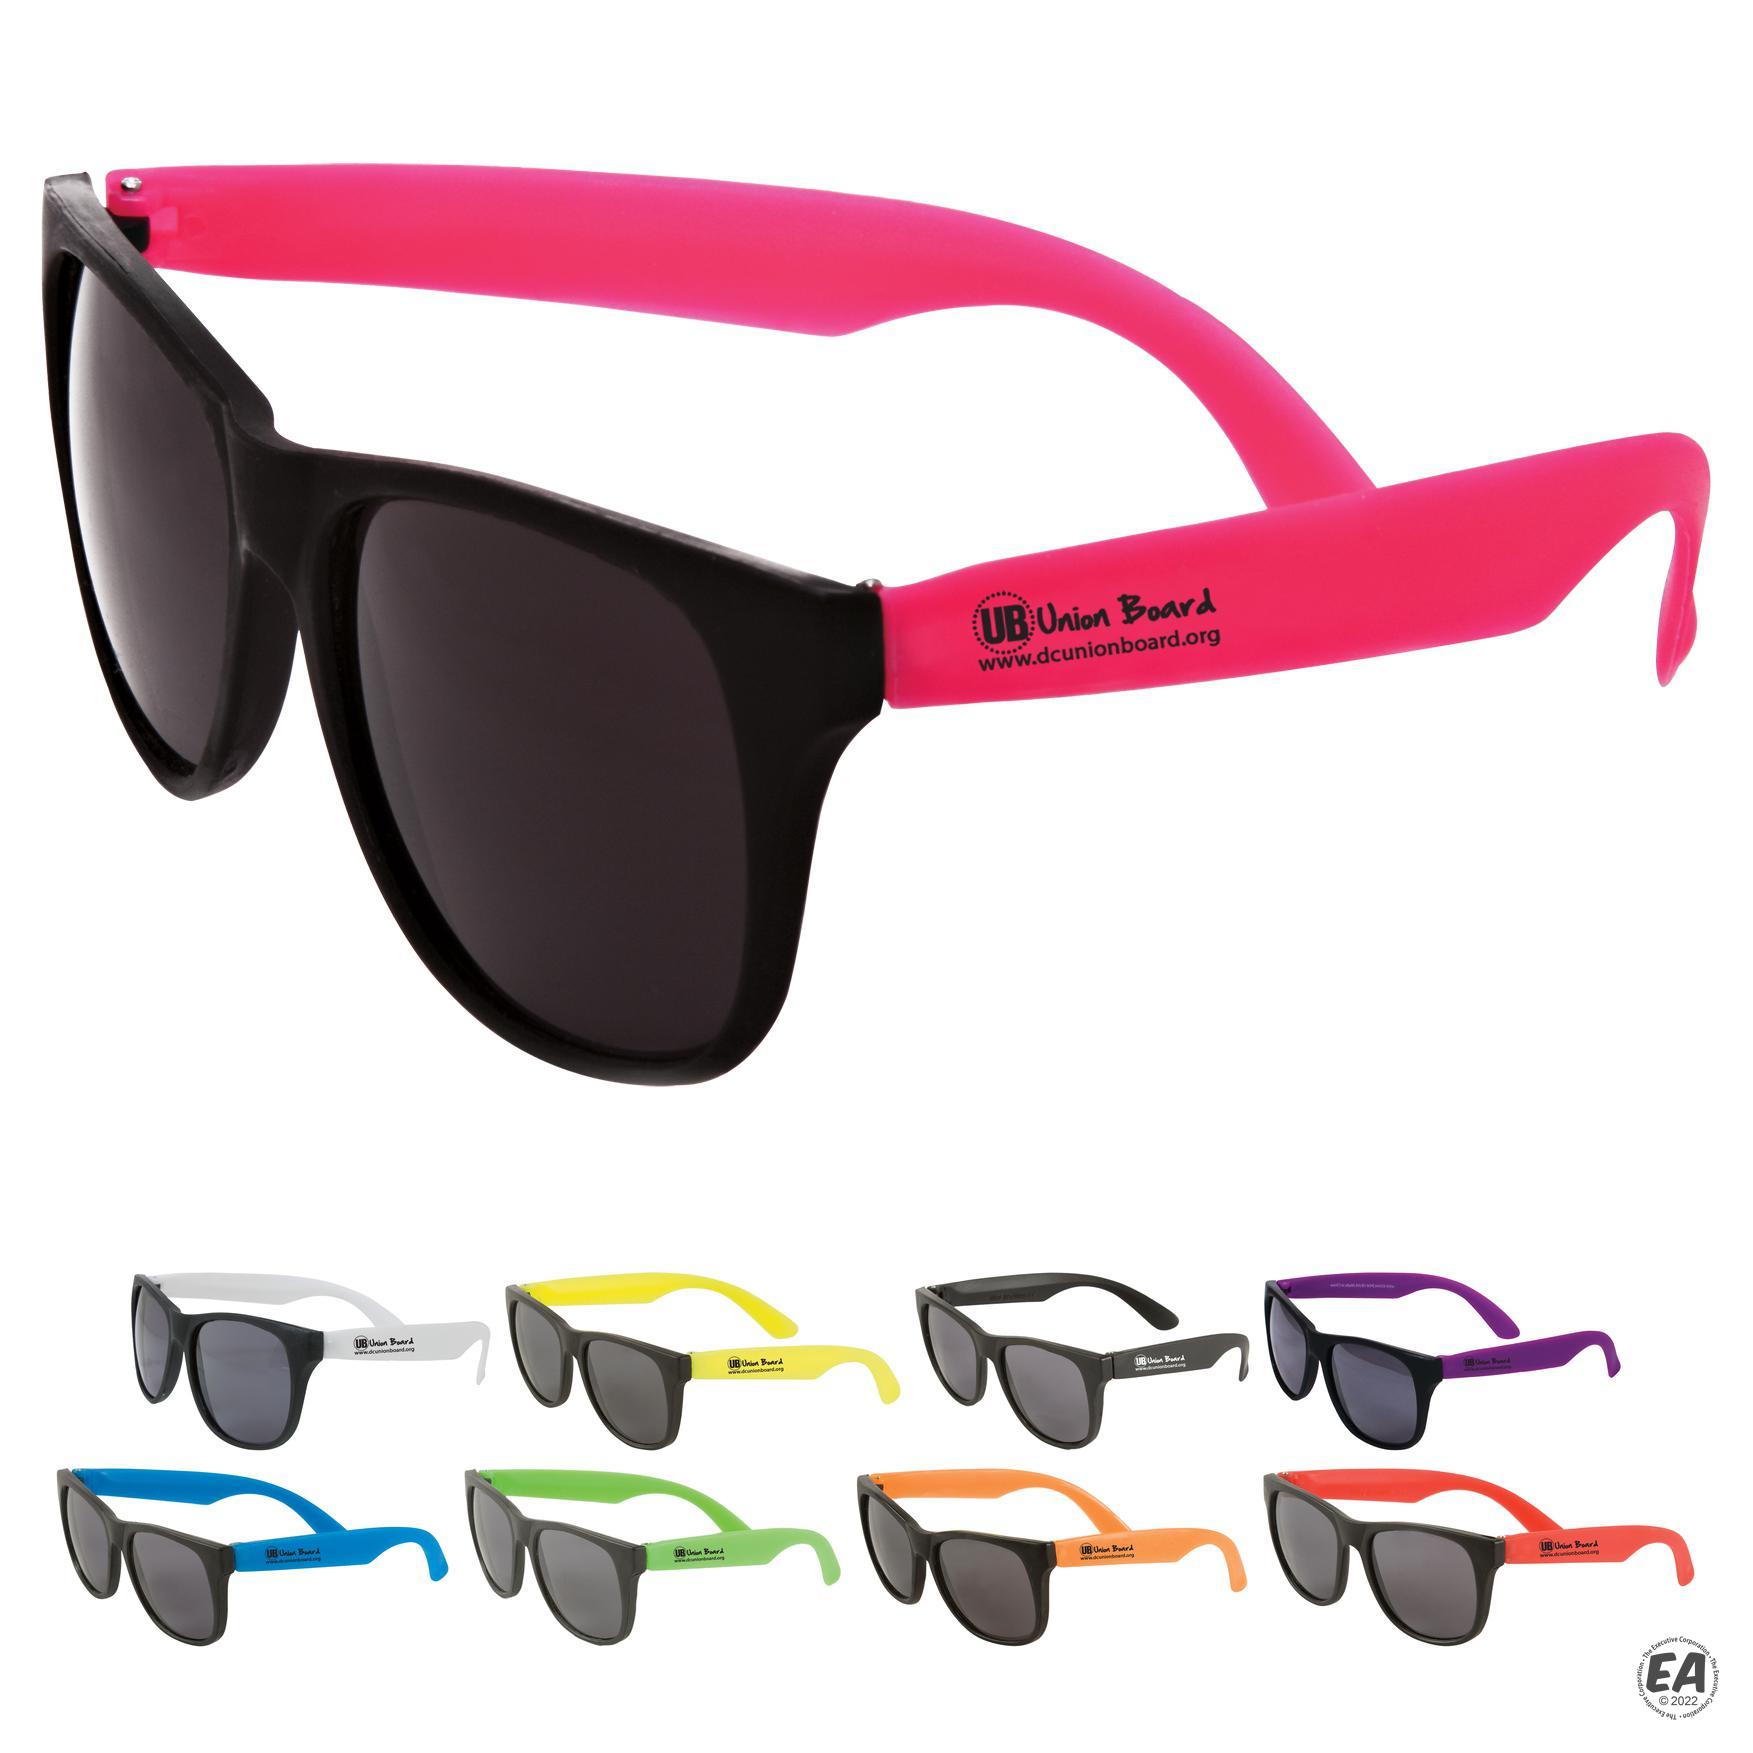 sunglasses logo ideas 4